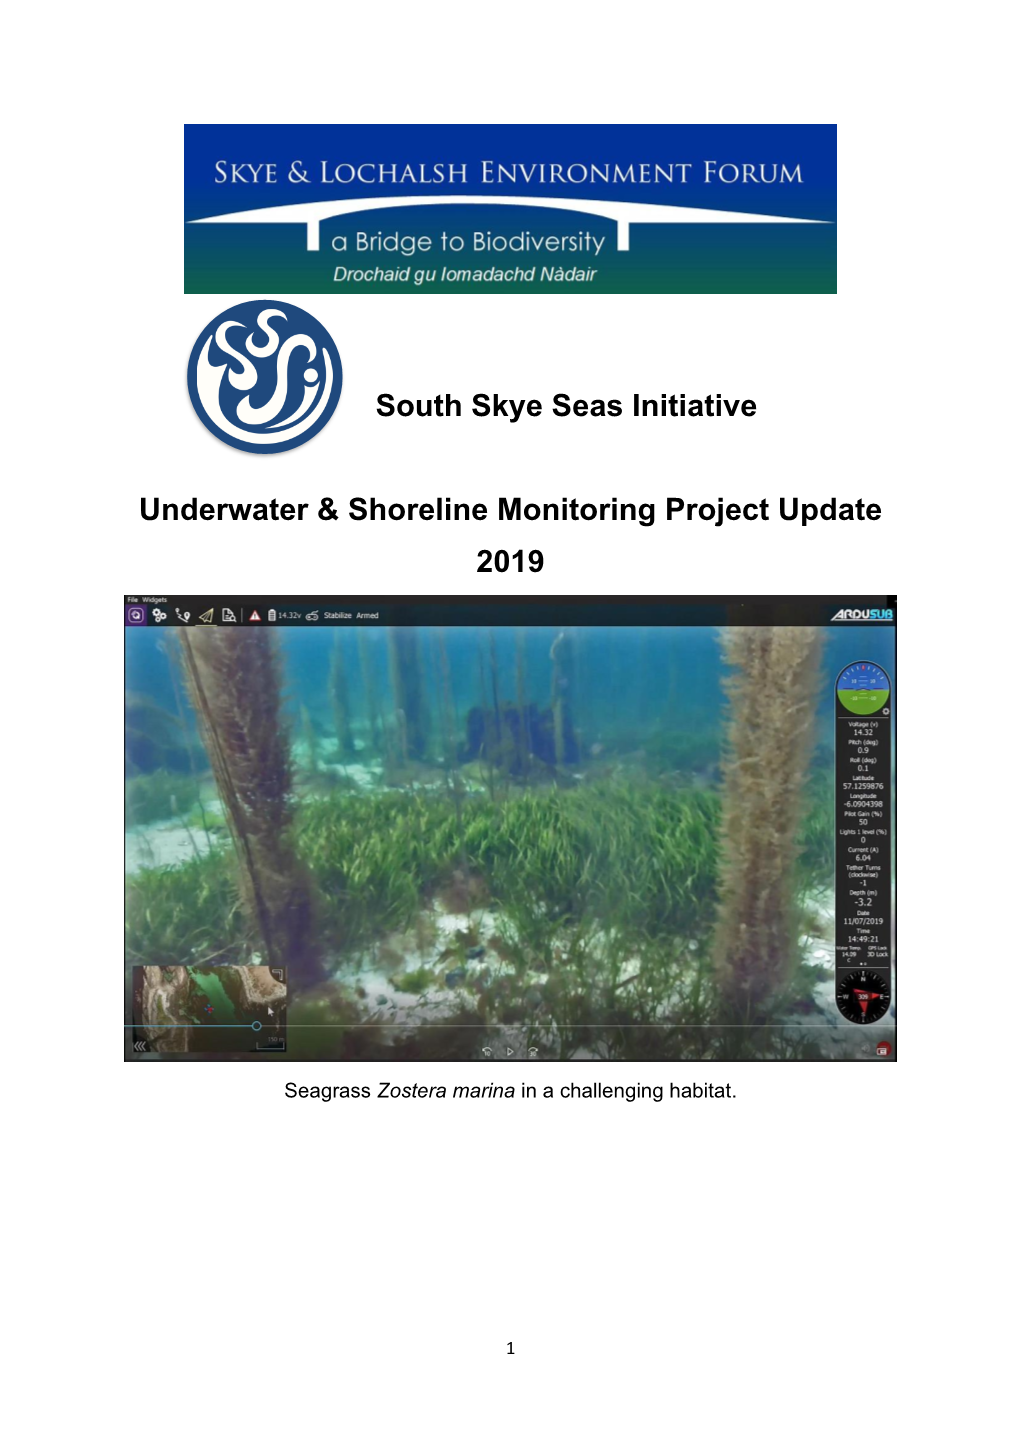 South Skye Seas Initiative Underwater & Shoreline Monitoring Project